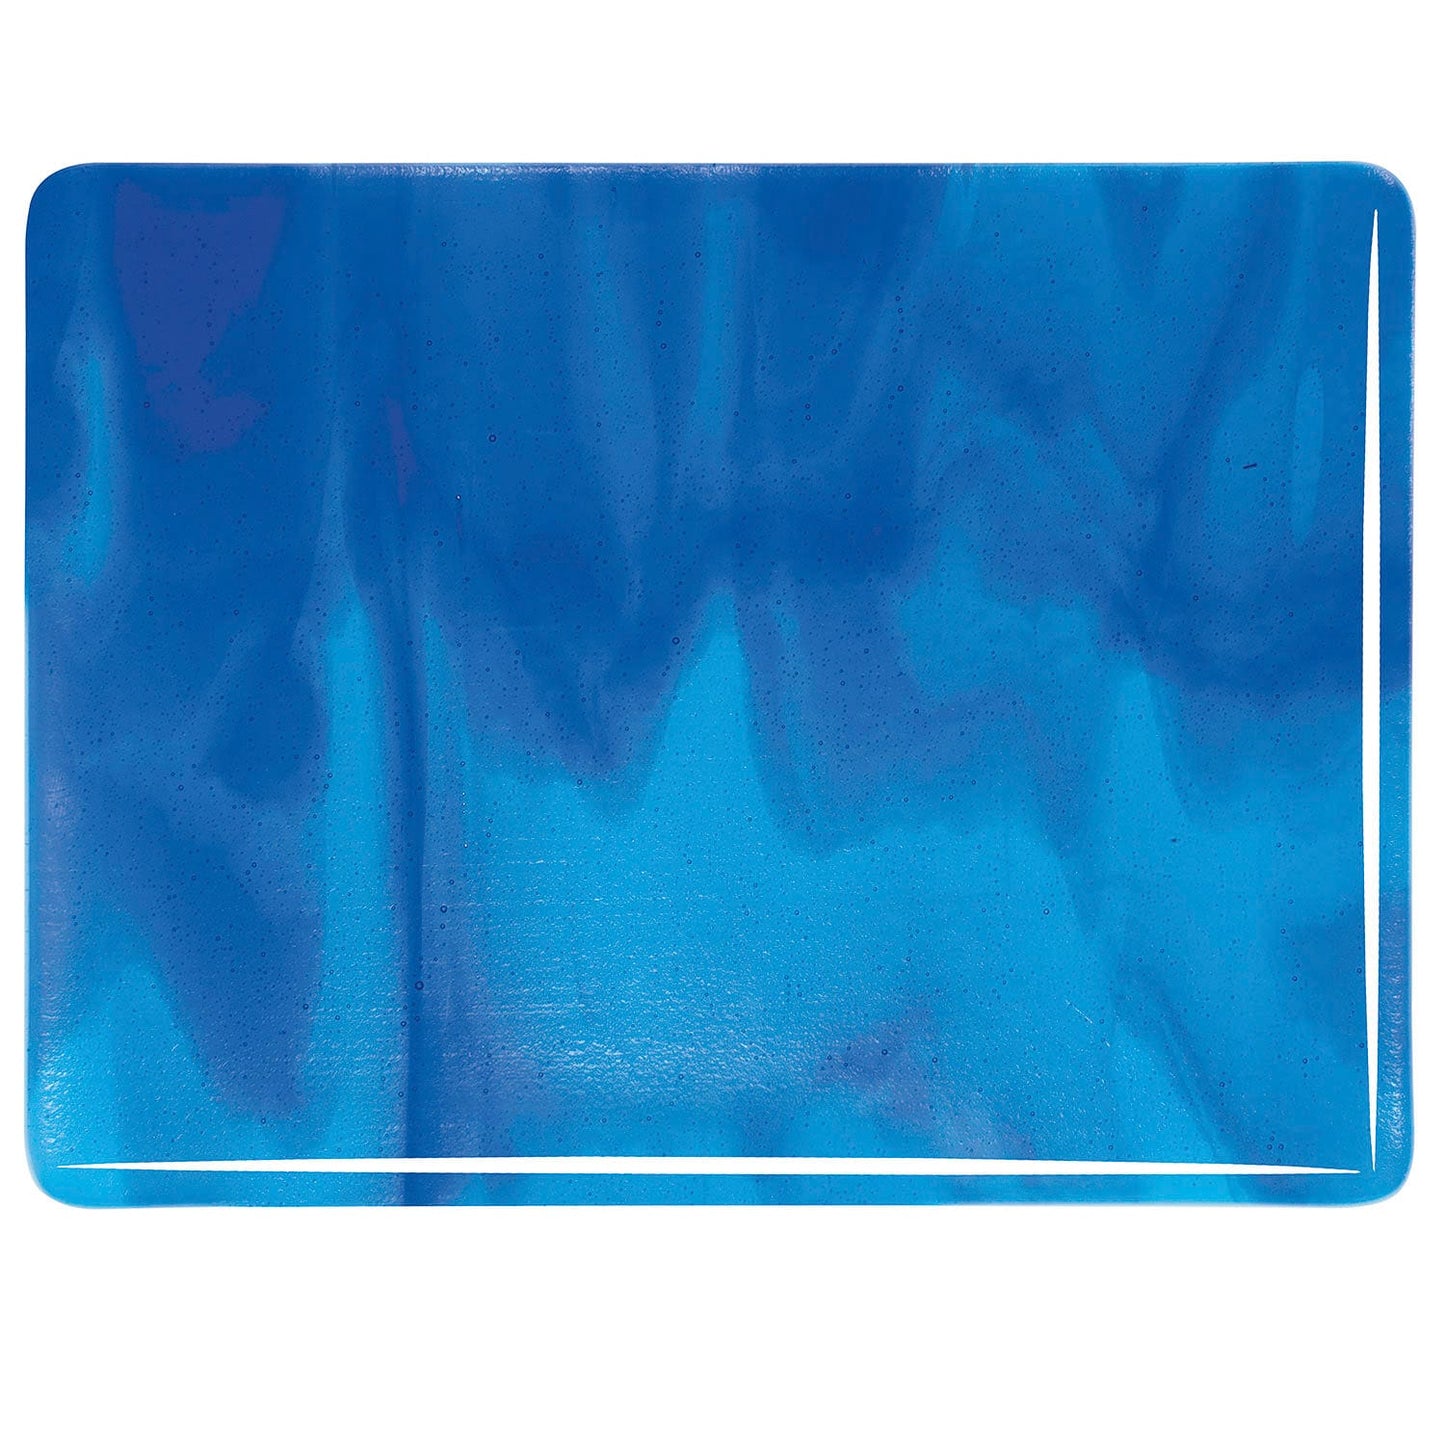 Bullseye COE90 Fusing Glass 002116 Turquoise Blue, Deep Royal Blue Full Sheet